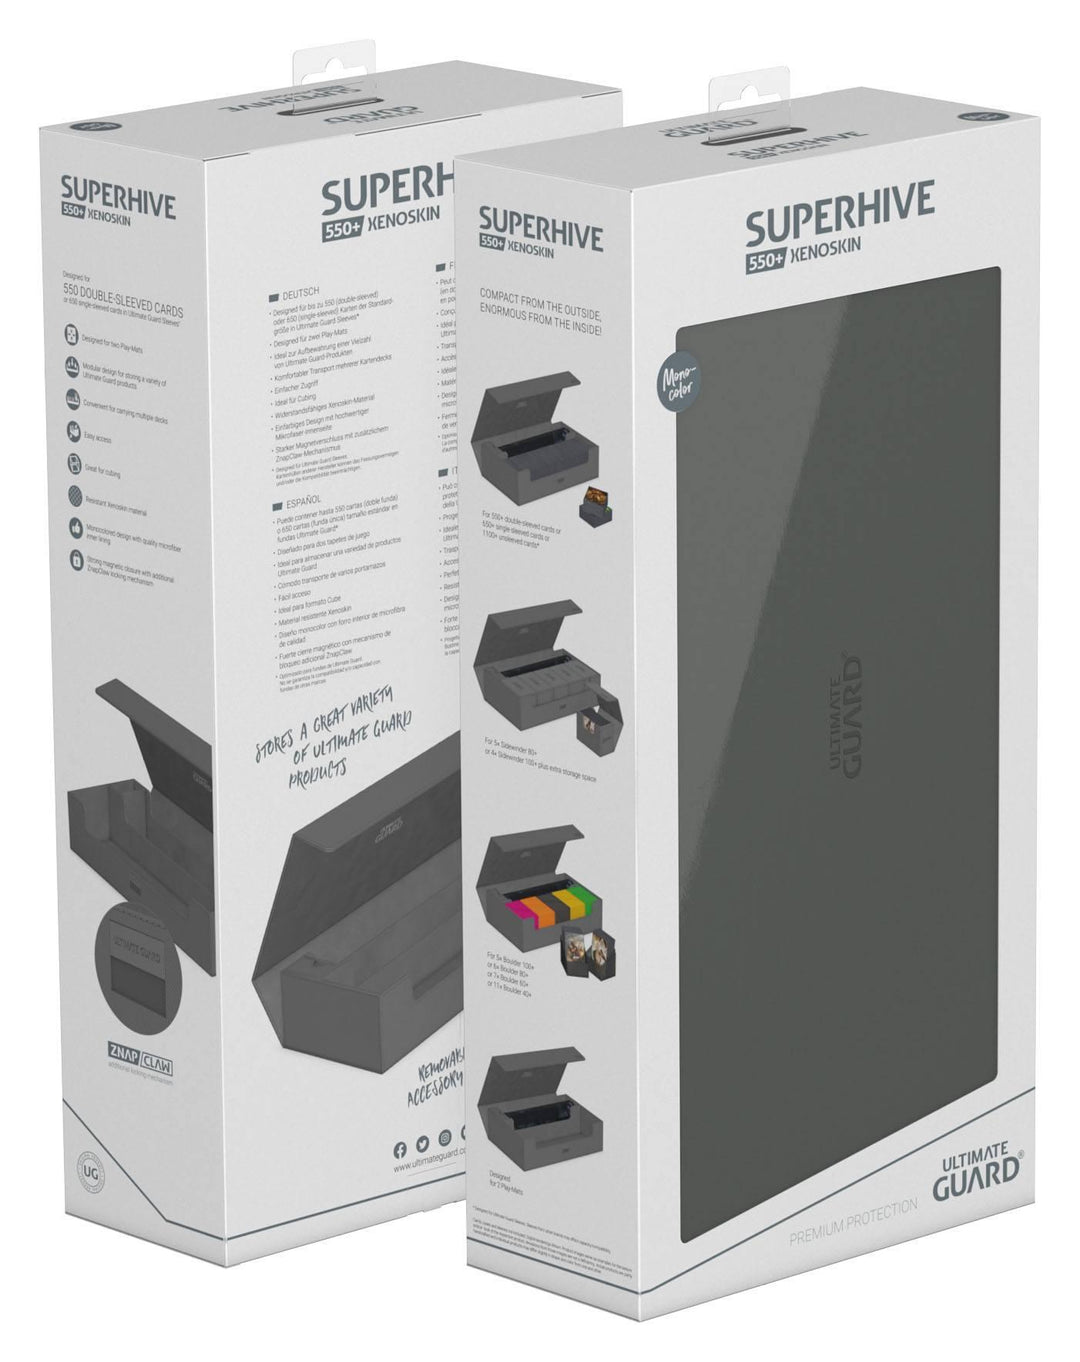 Ultimate Guard Superhive 550+ XenoSkin Monocolor Grey / Grau